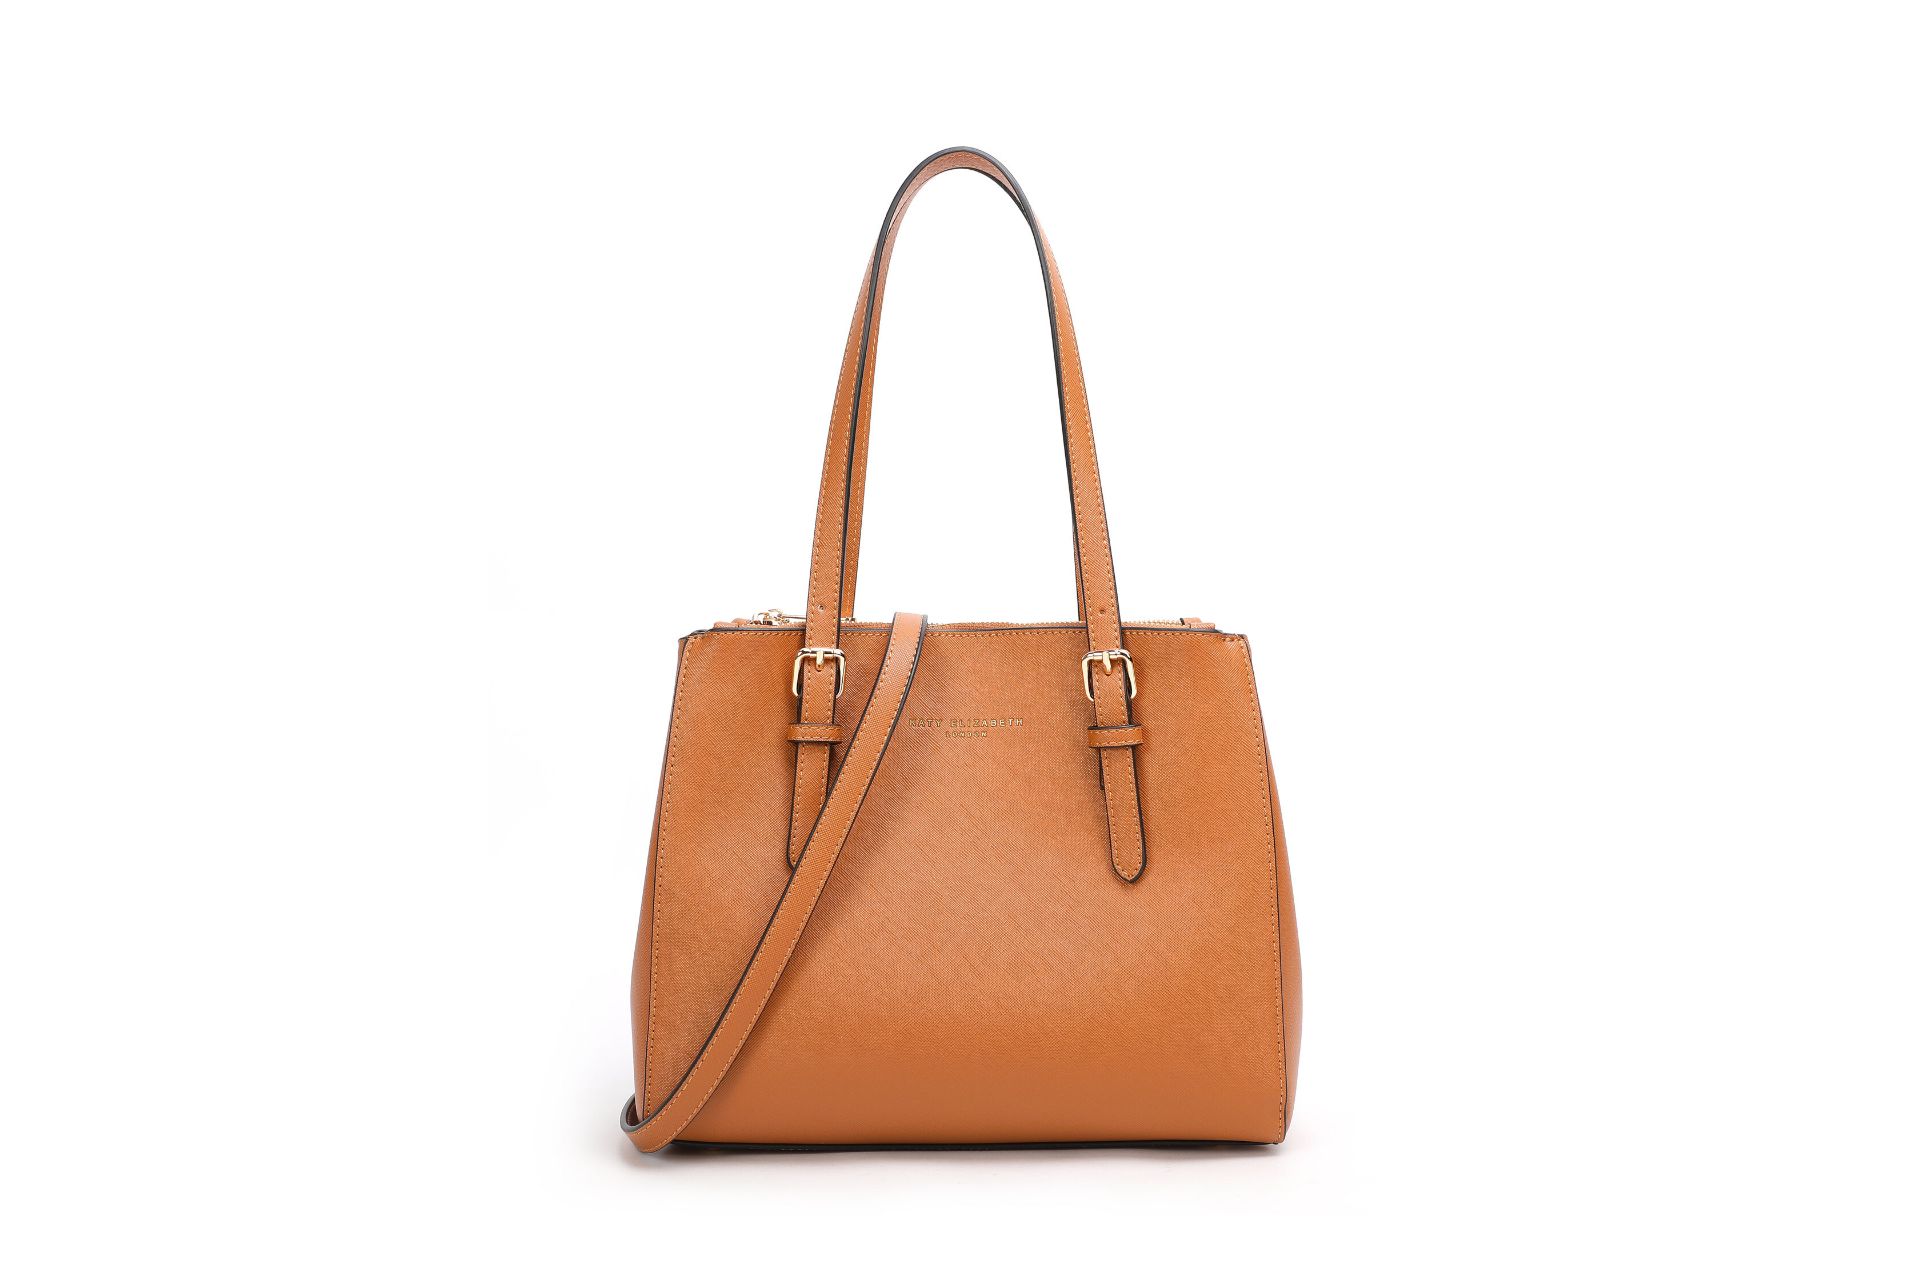 No VAT Brand New Special Edition Katy Elizabeth London Brown Medium Tote Bag With Detachable